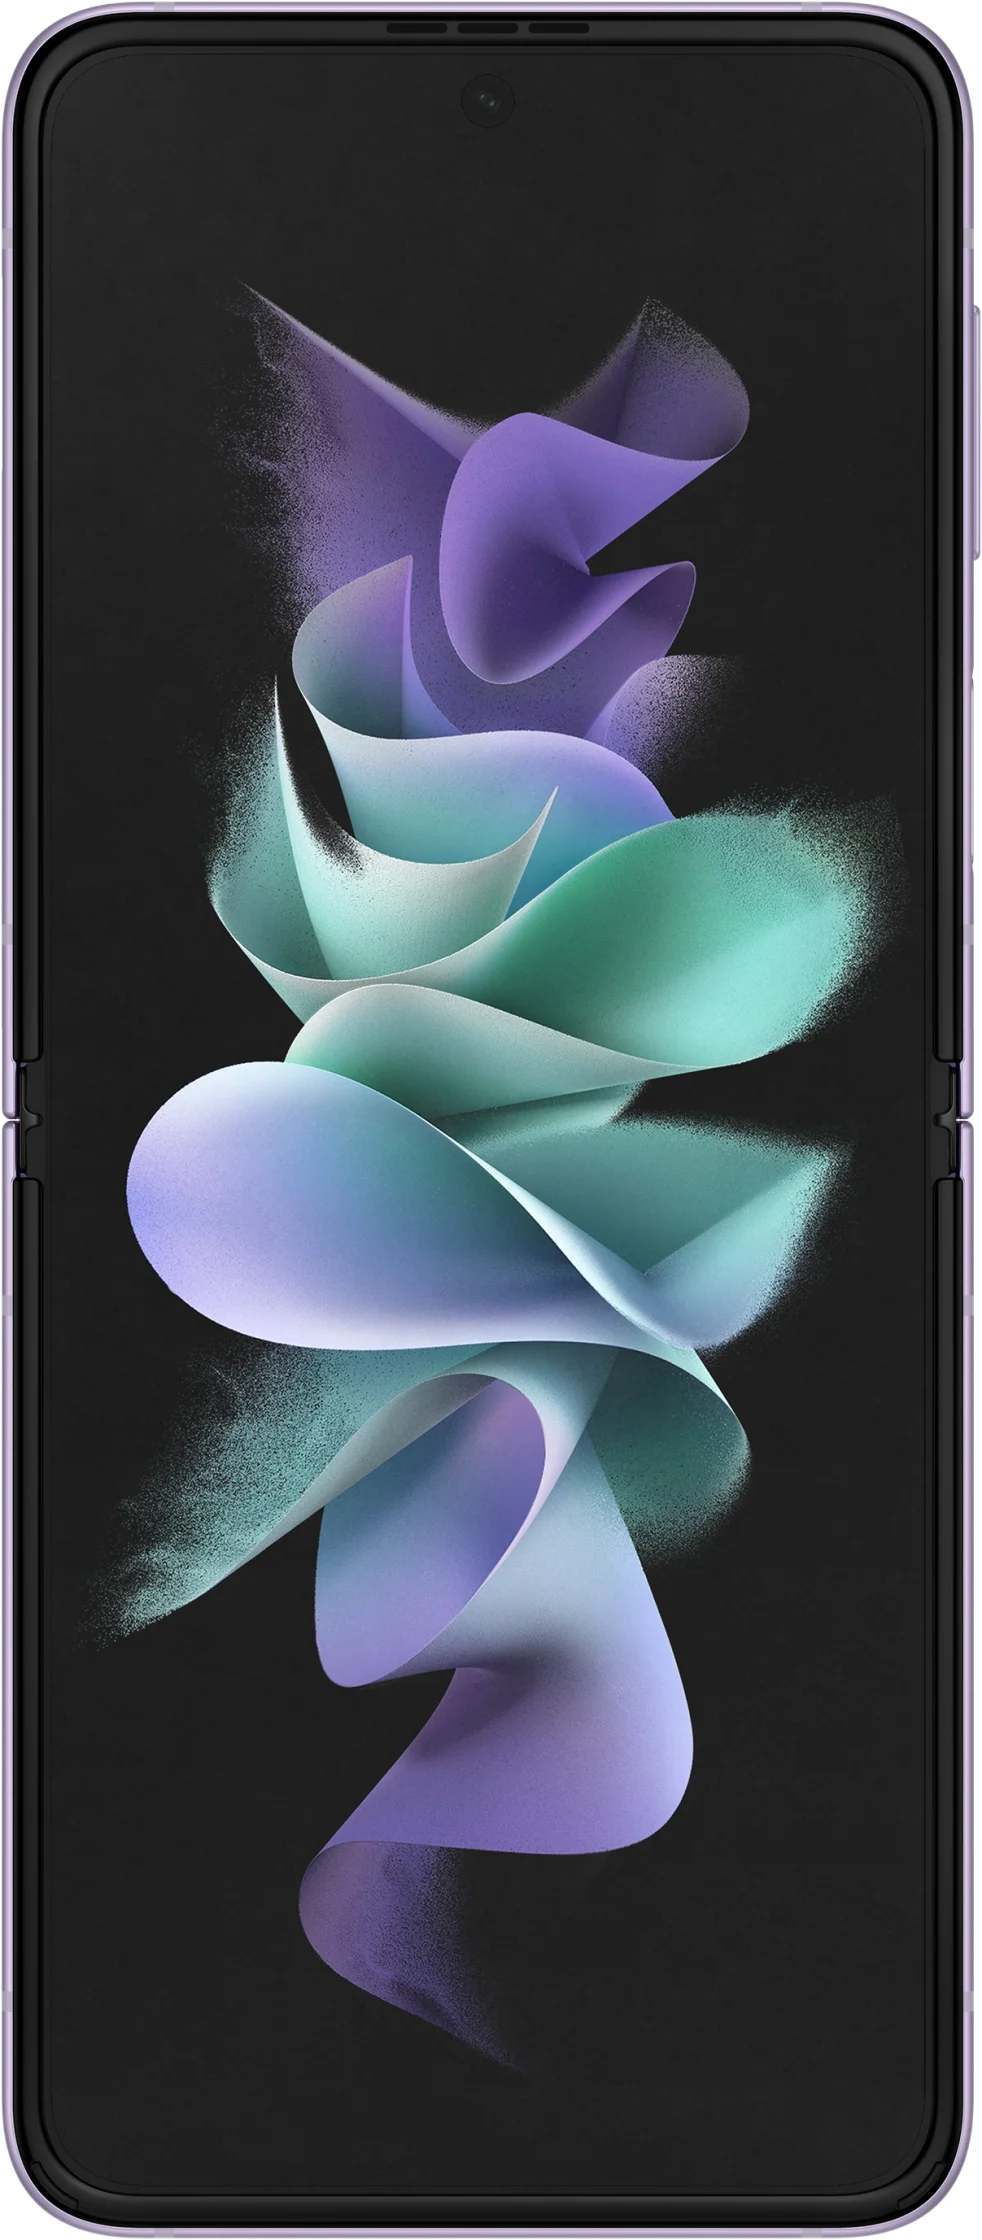 Rent Samsung Galaxy Z Flip 3 Smartphone - 256GB - Dual Sim from €41.90 per  month